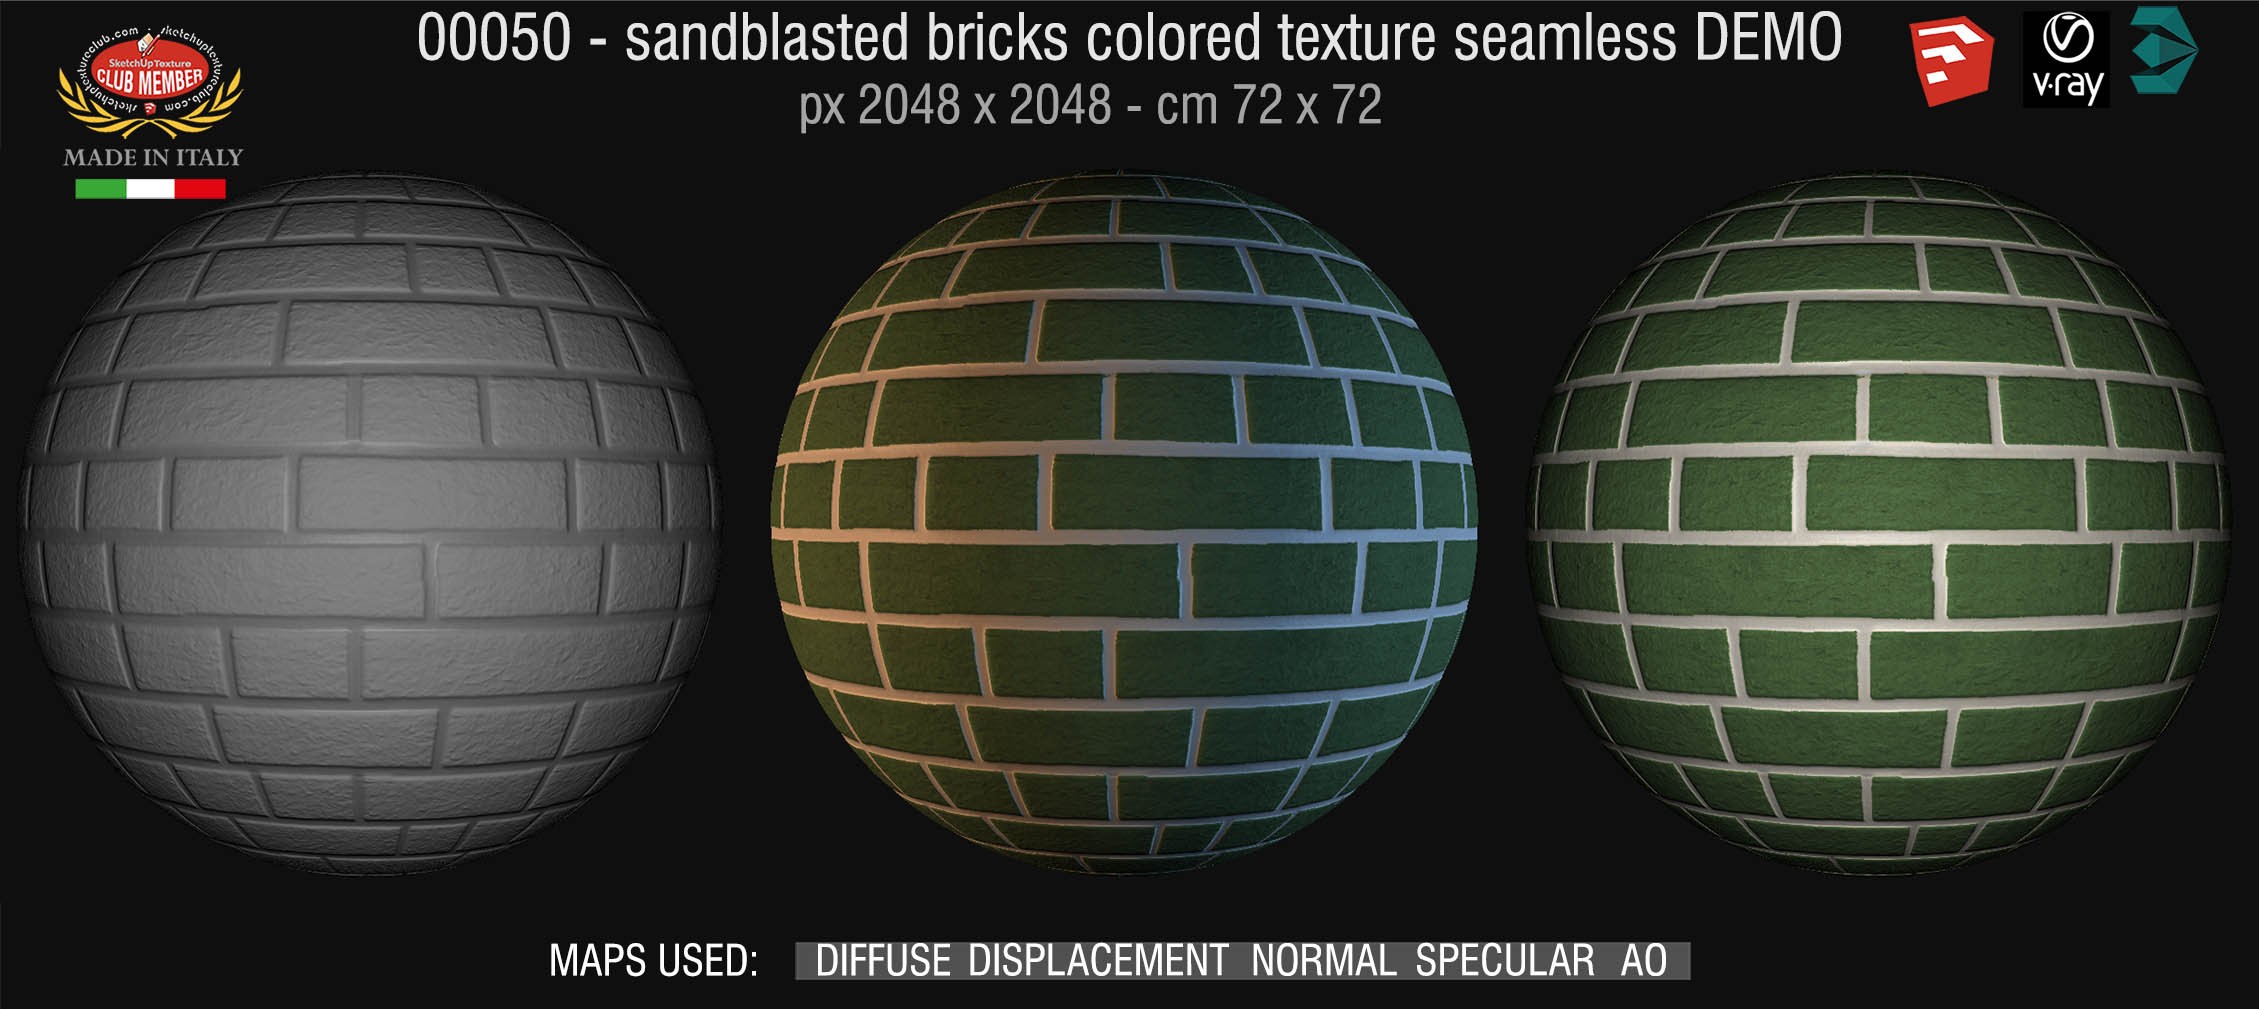 00050 Sandblasted bricks colored texture seamless + maps DEMO